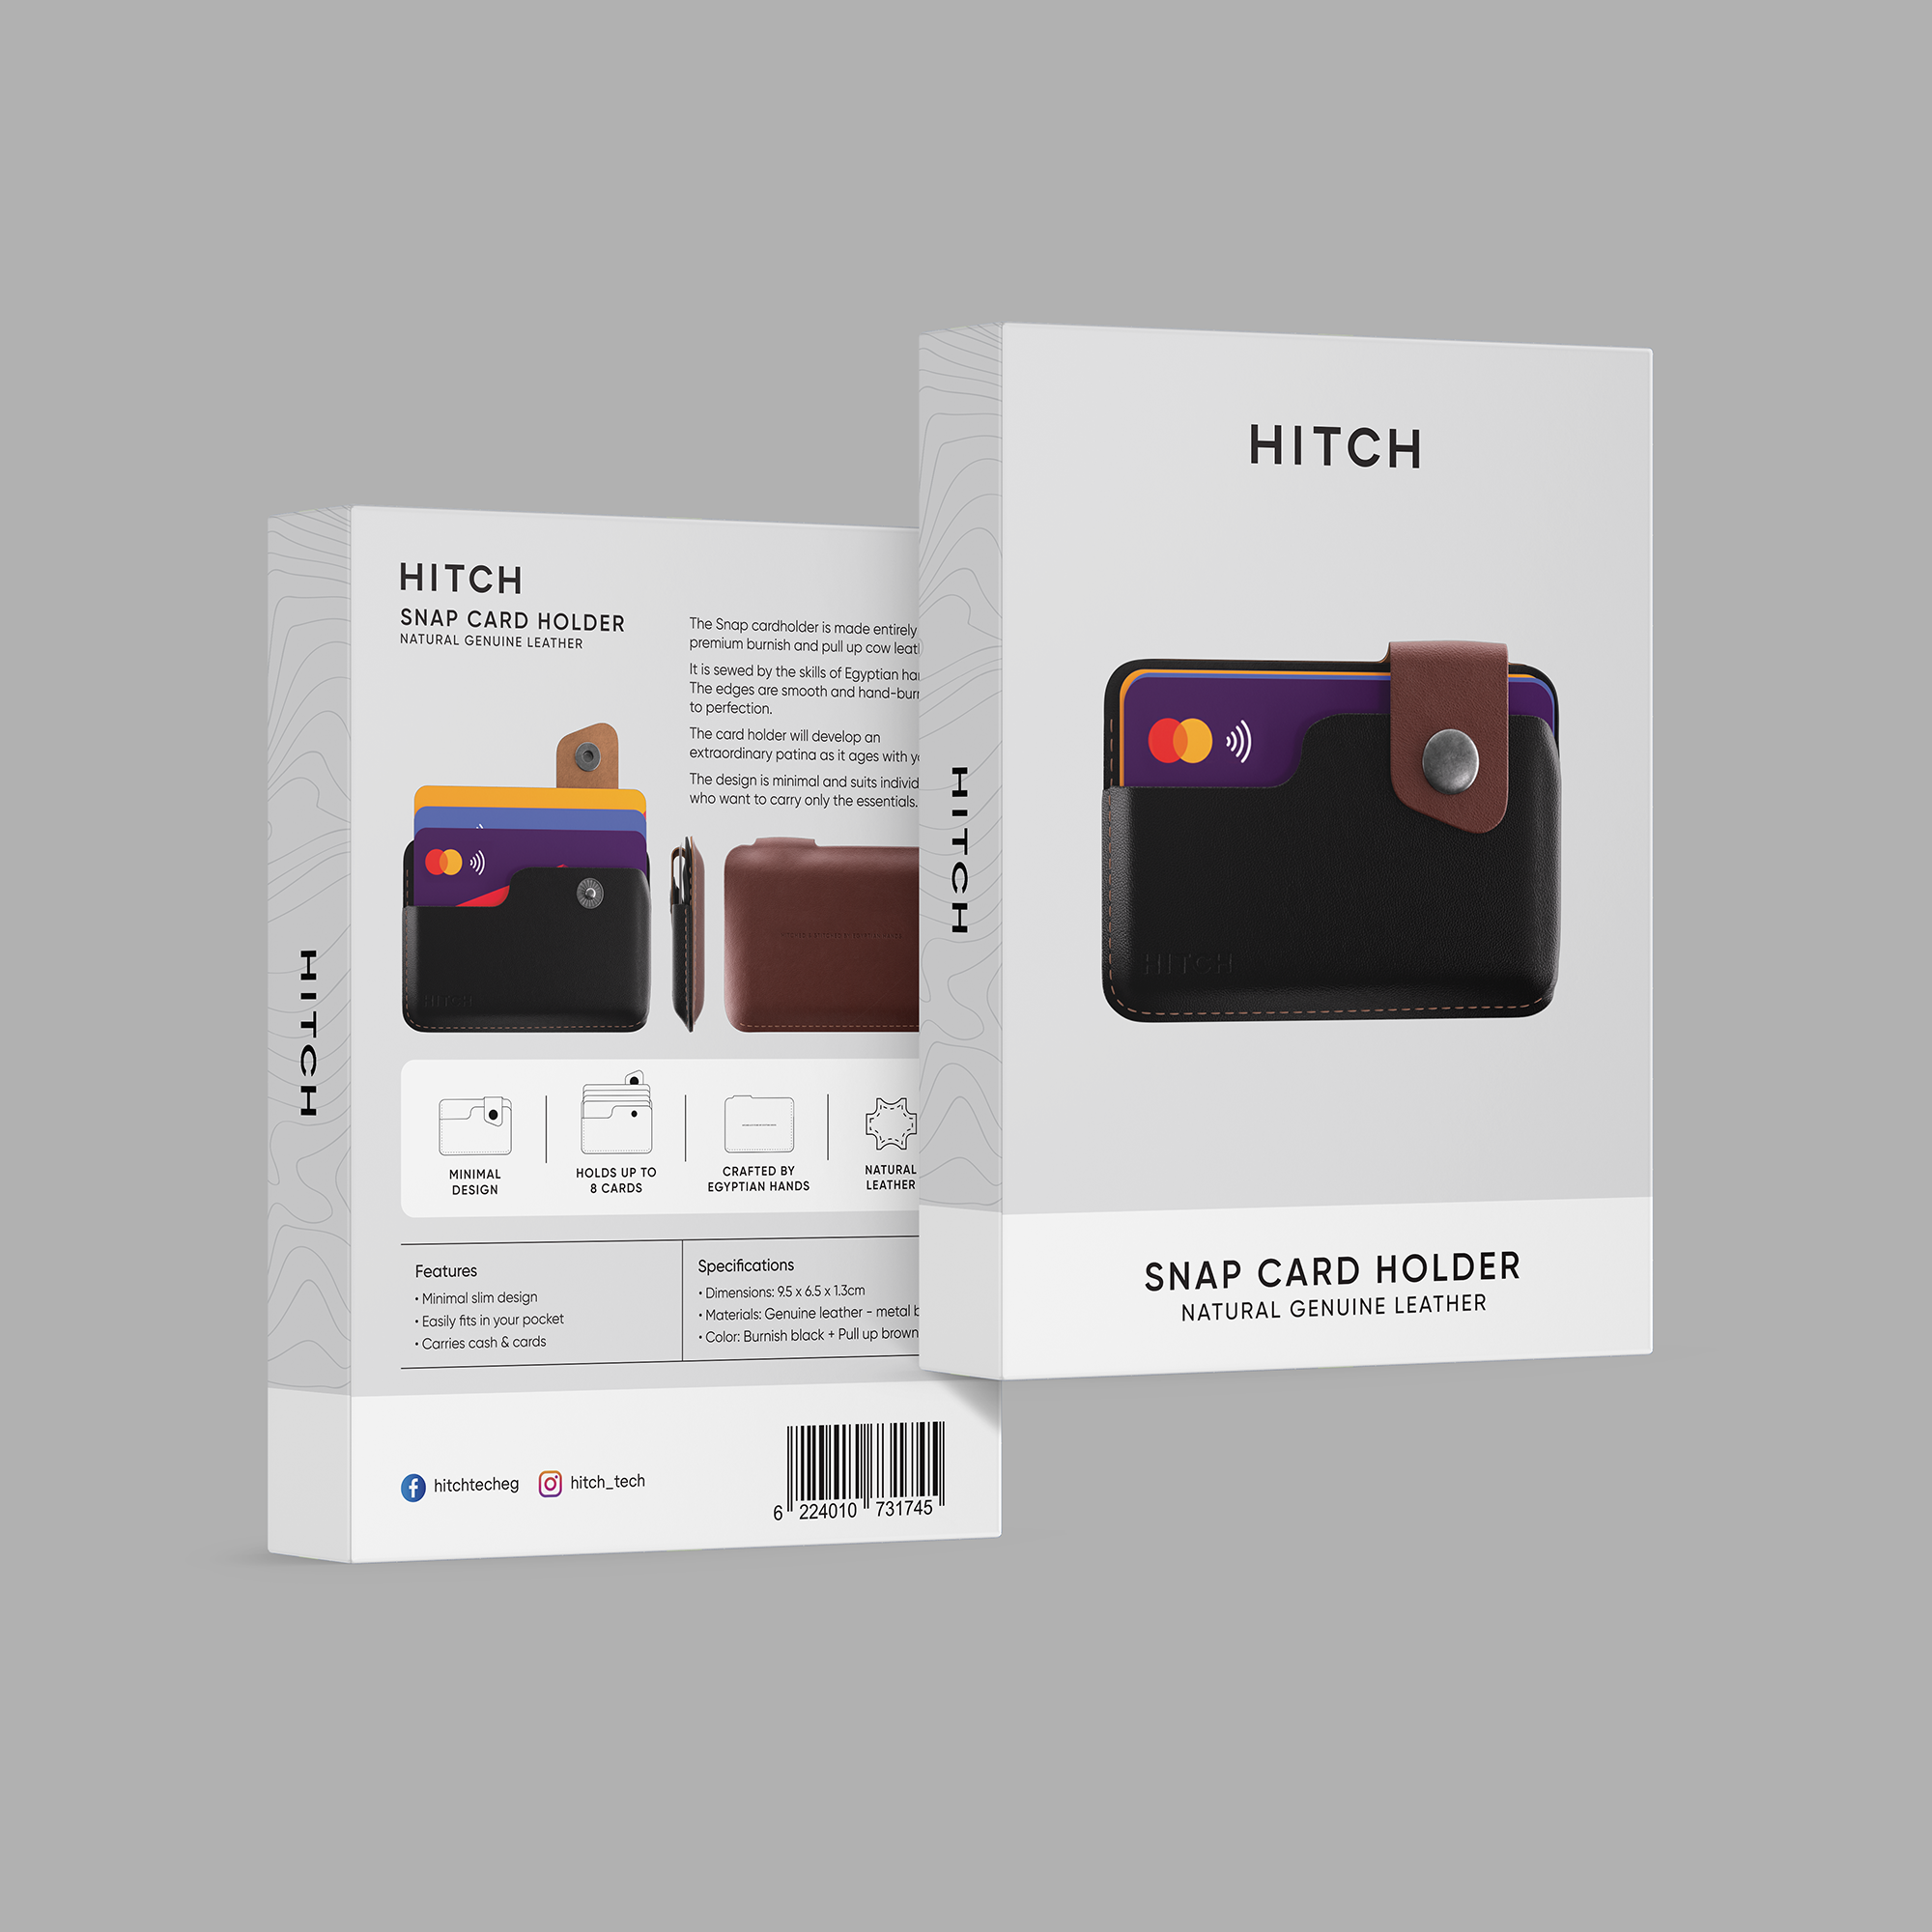 Hitch snap cardholder